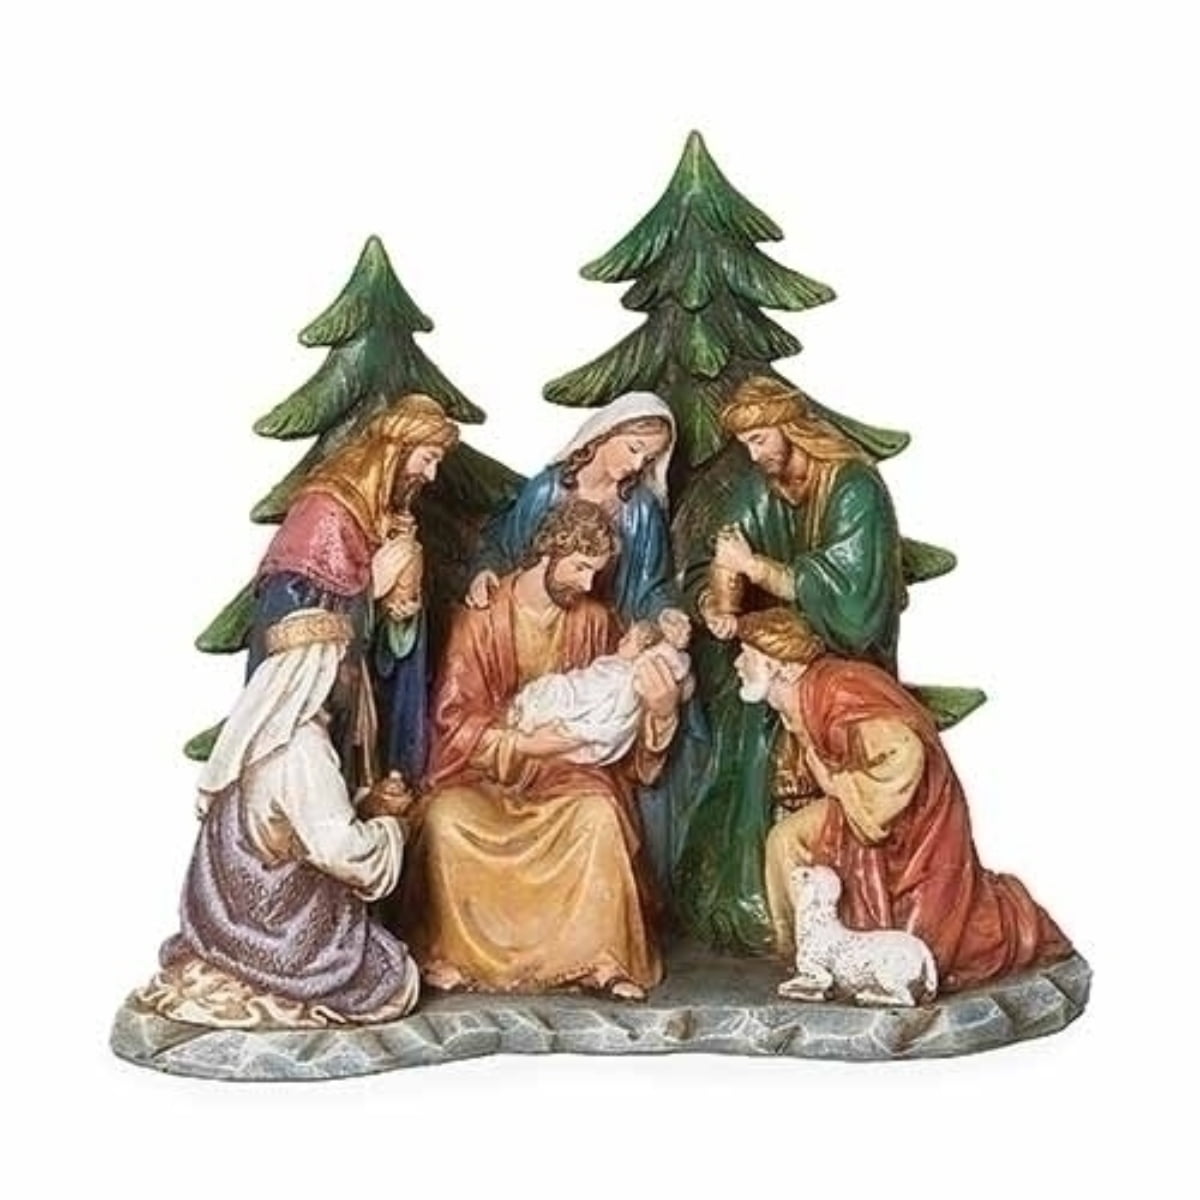 5 Pieces Resin Nativity Tabletop Scene Figurines Christmas Decorations Traditional Figures Jesus Mary Joseph 